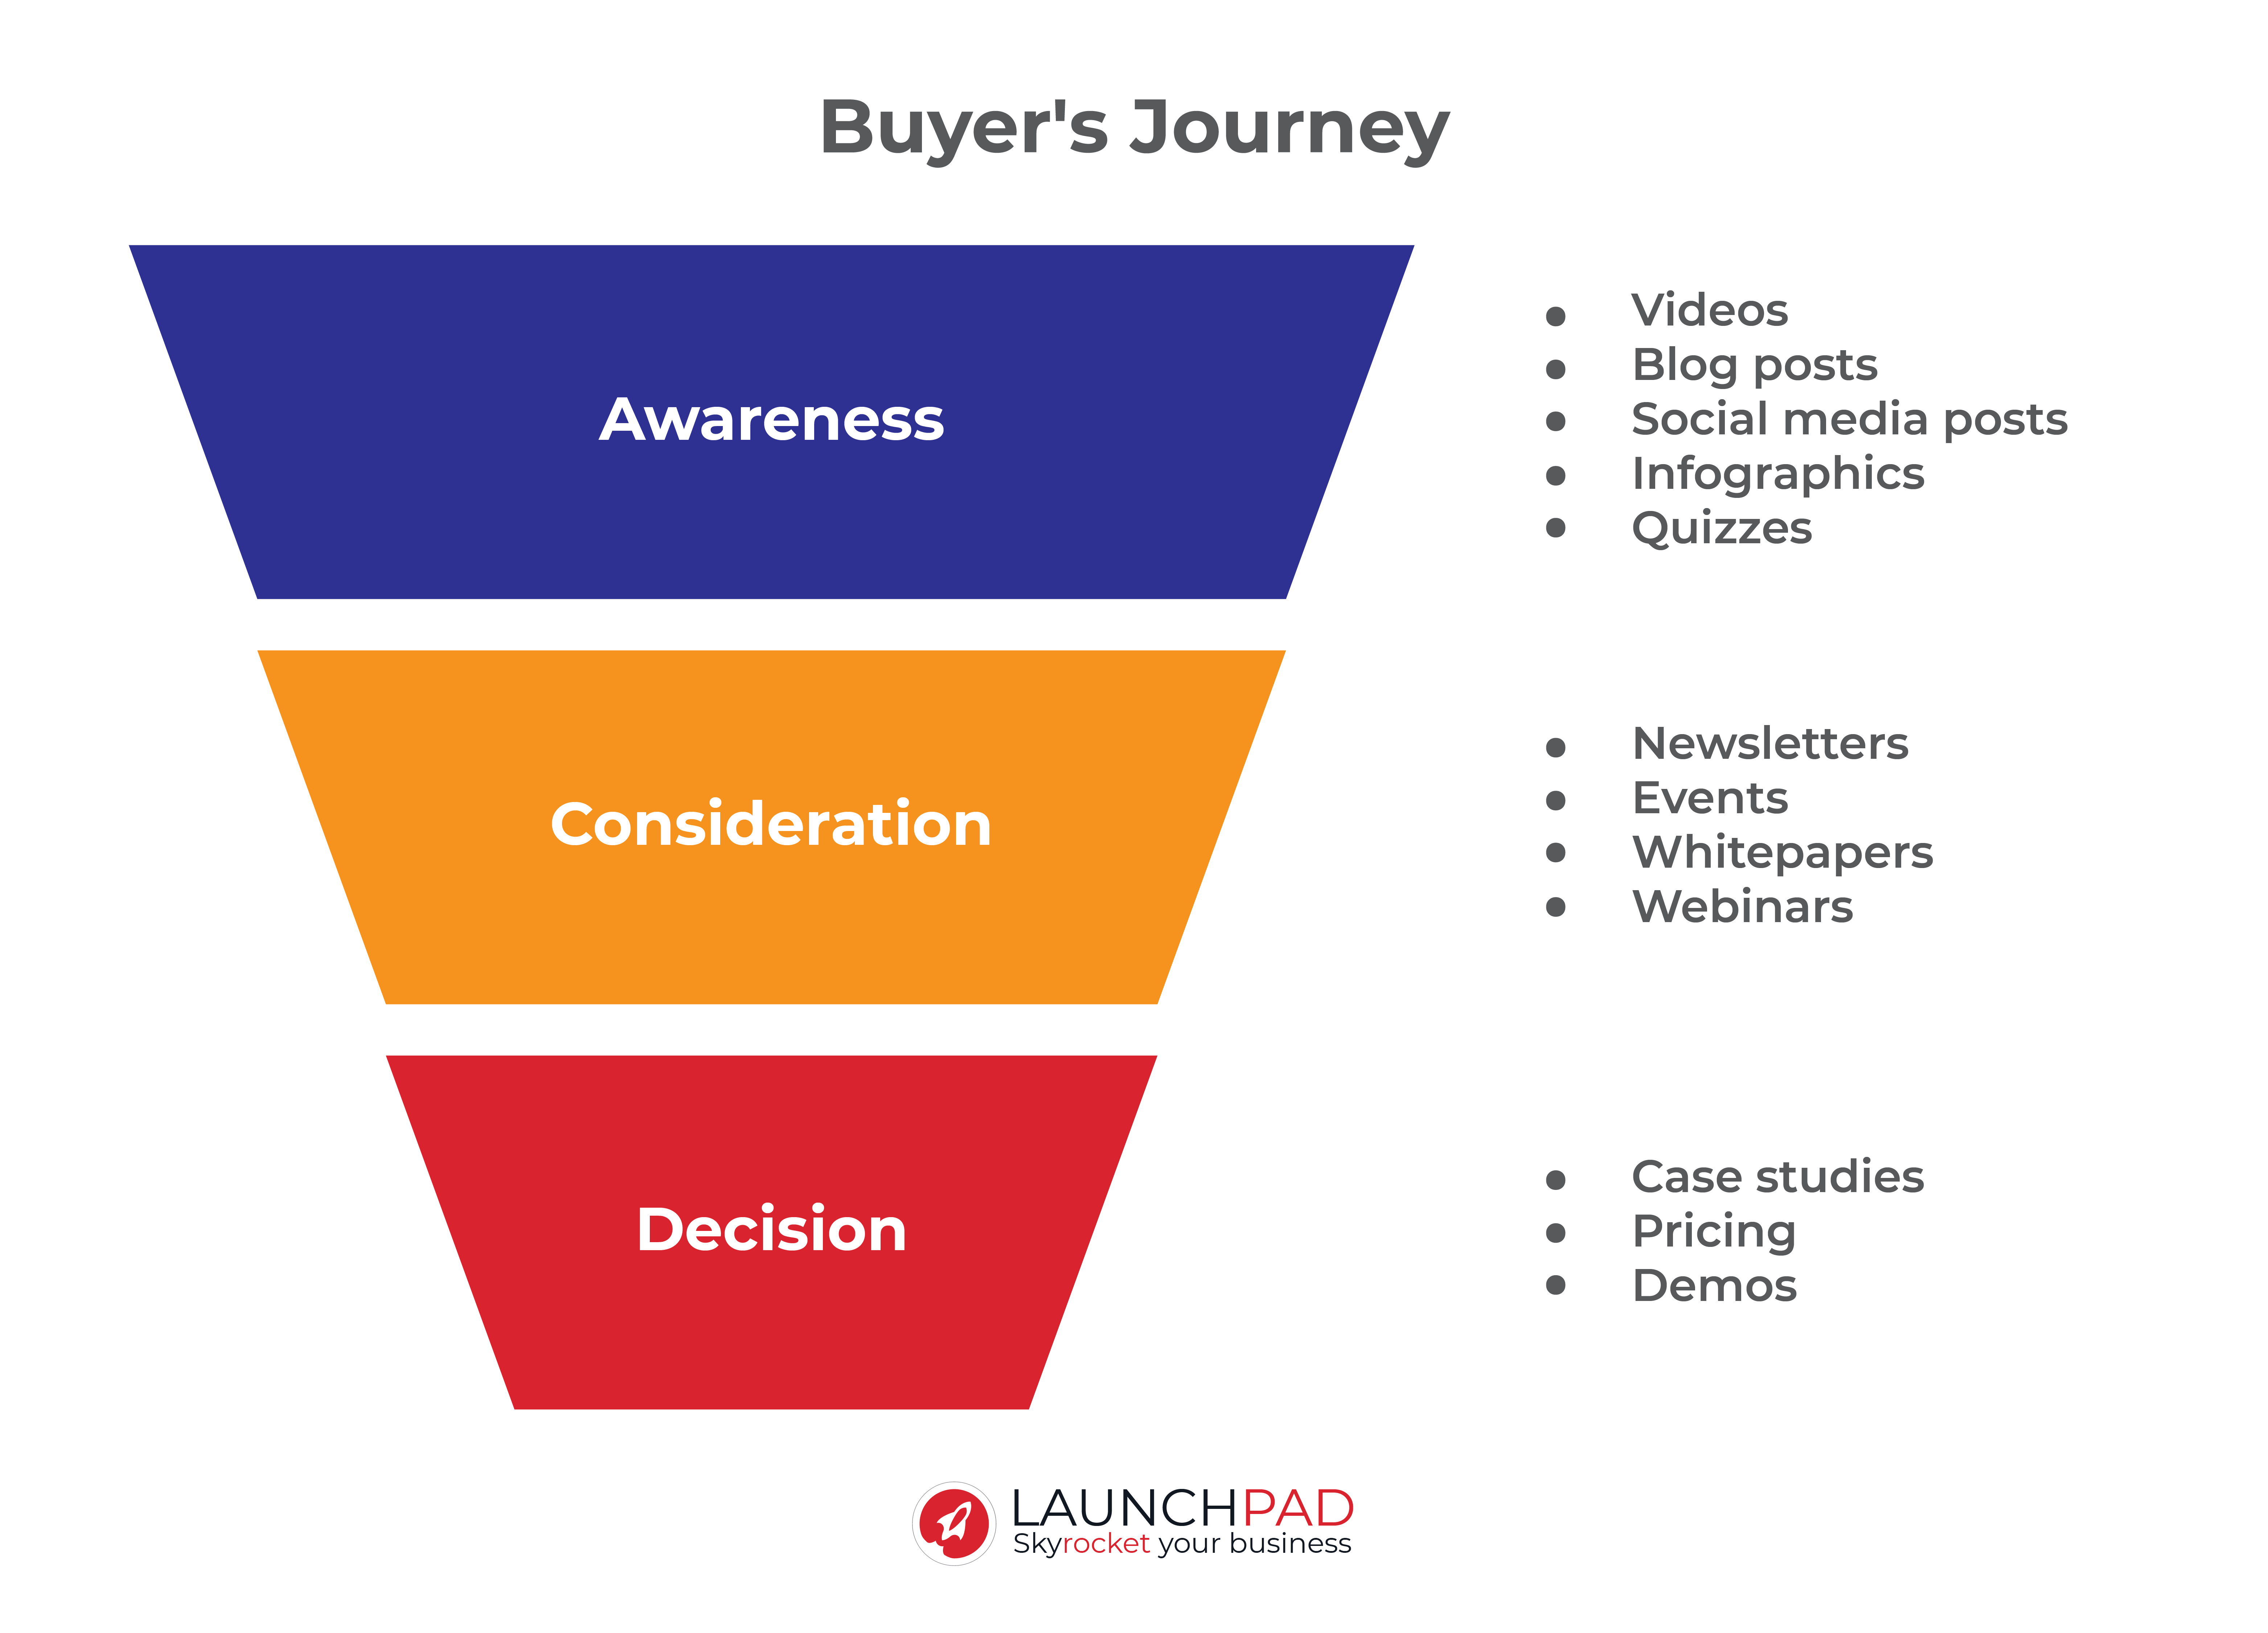 when identifying buyer's journey content